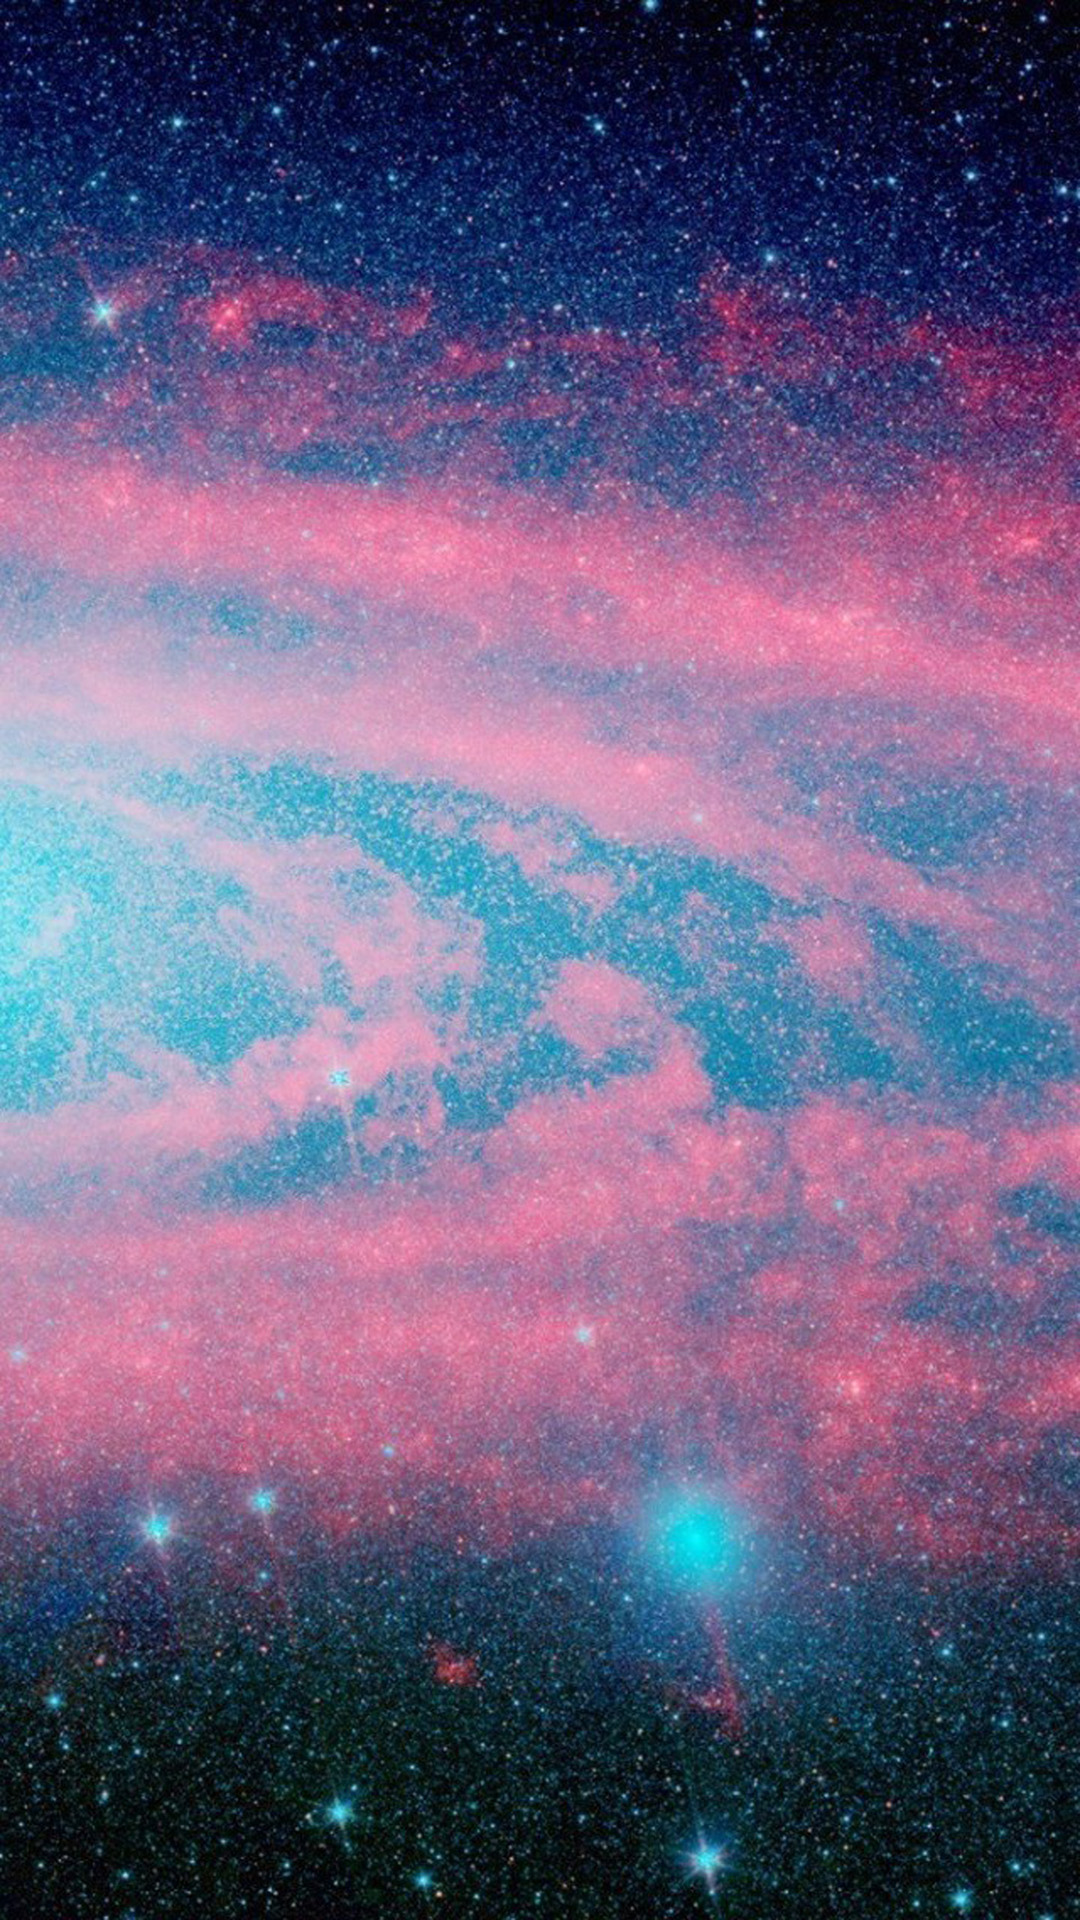 Galaxy S5 Wallpaper Related galaxy s5 wallpaper